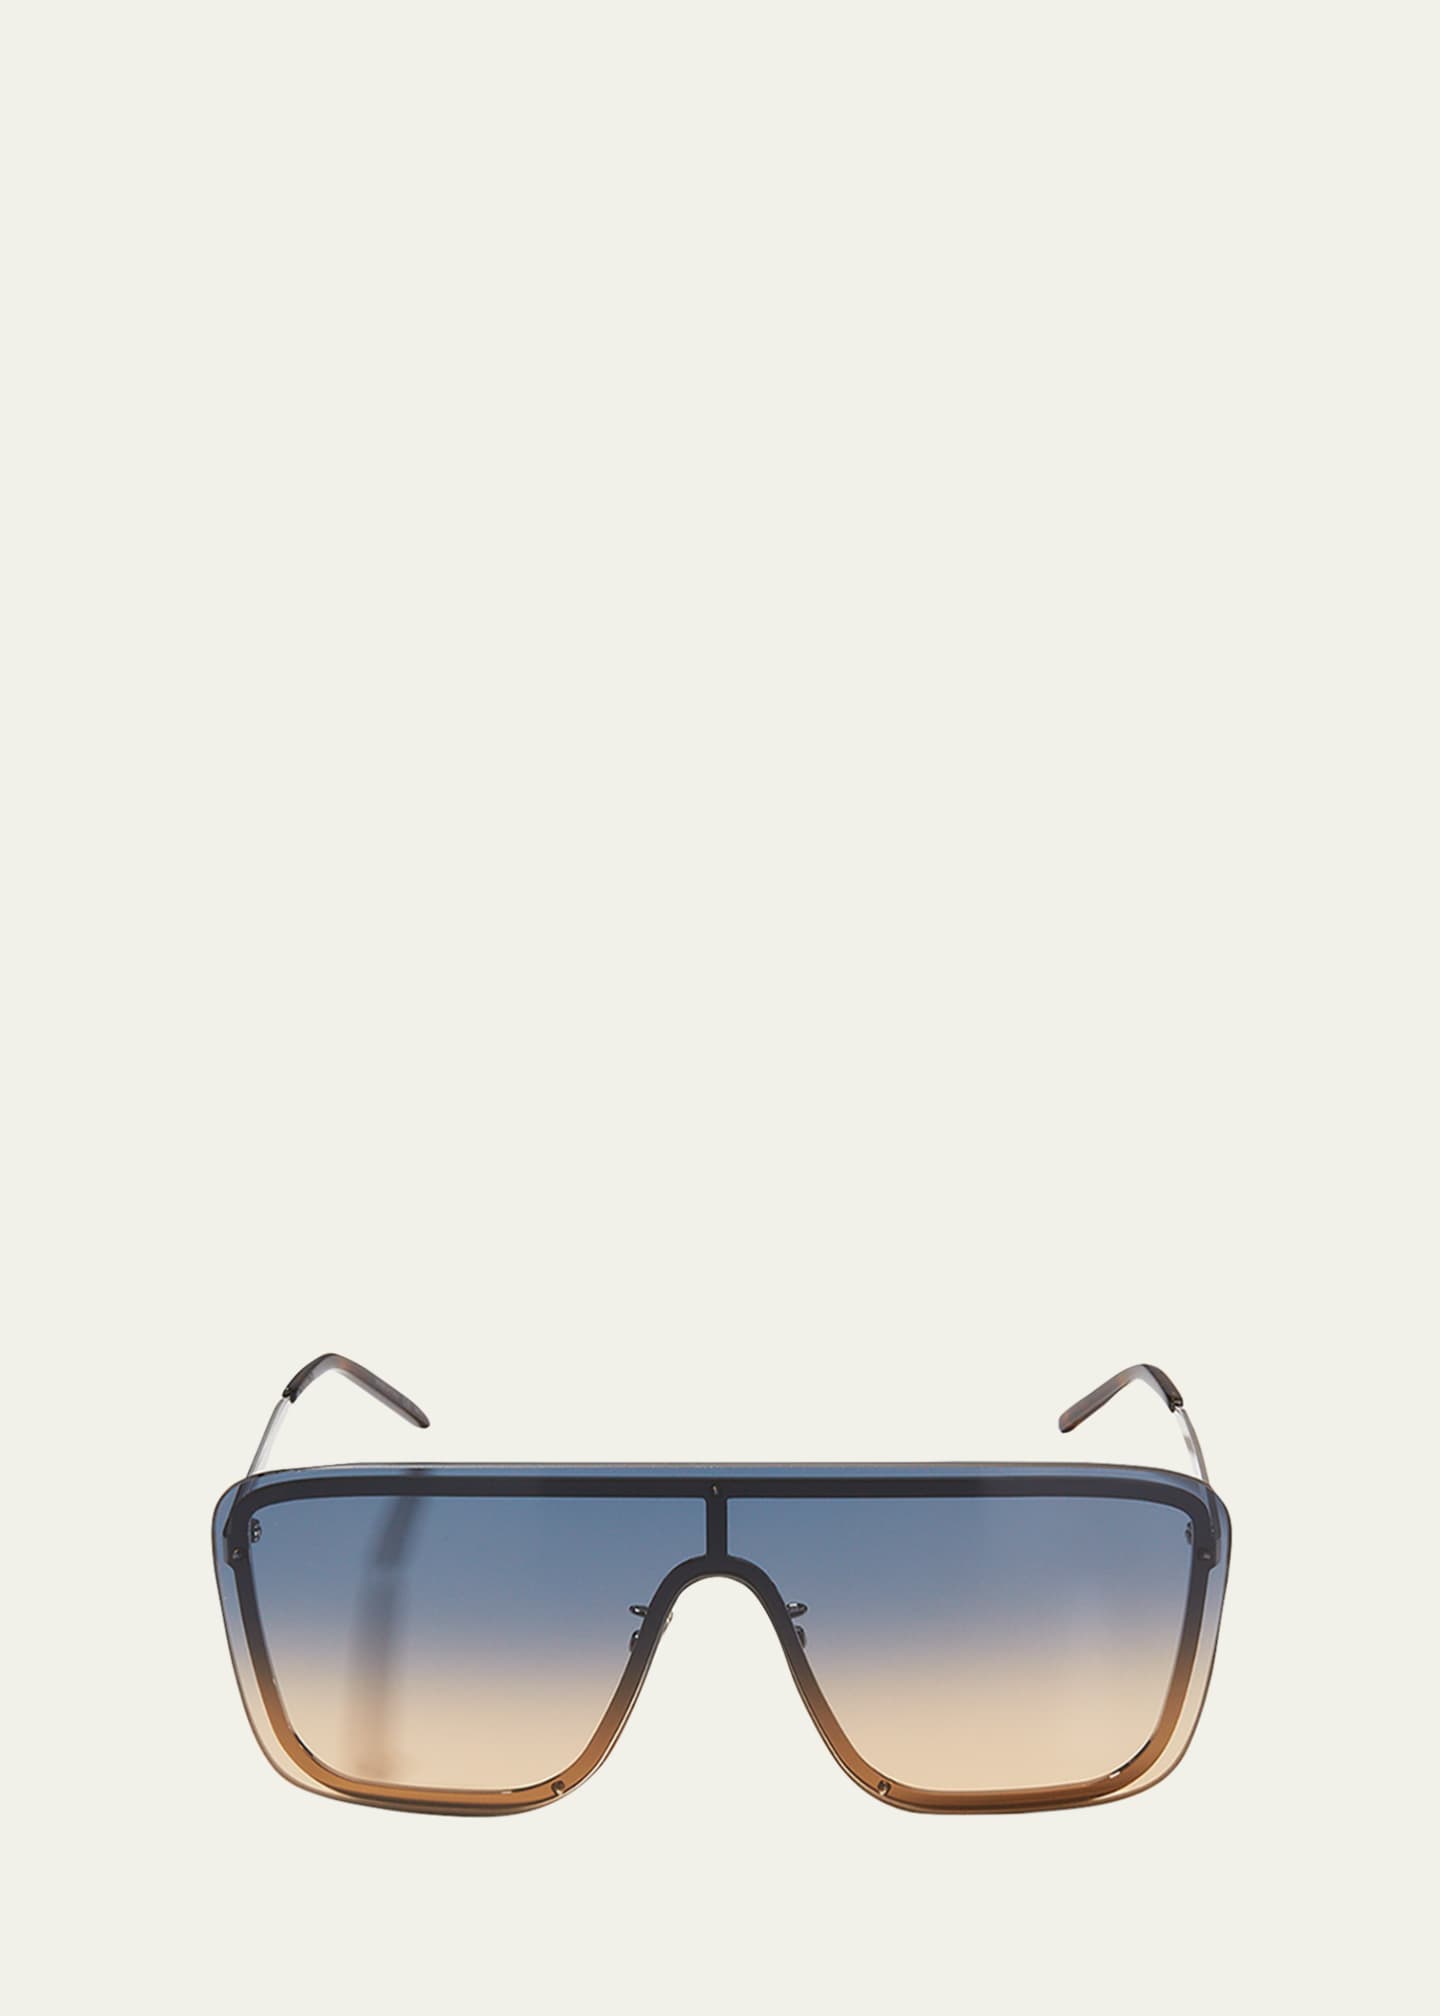 Saint Laurent SL 364 Mask Sunglasses